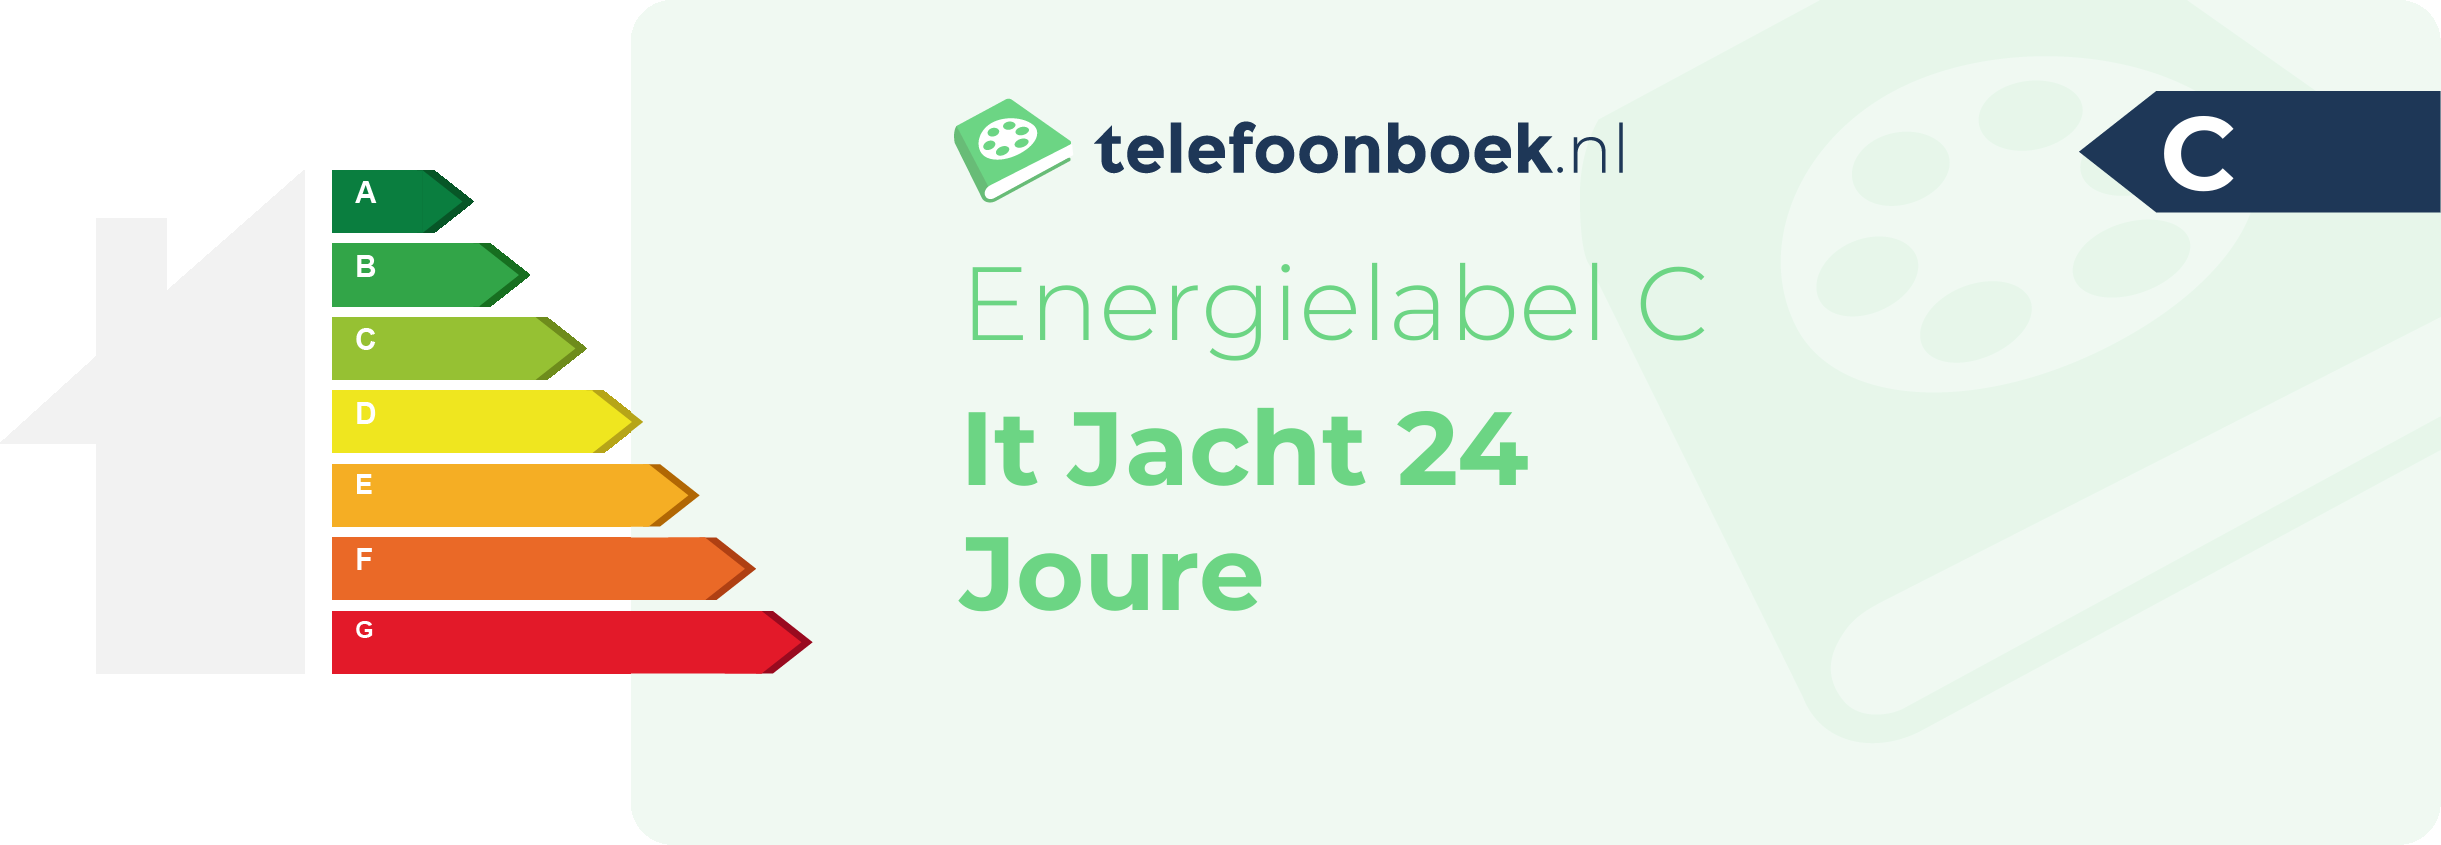 Energielabel It Jacht 24 Joure